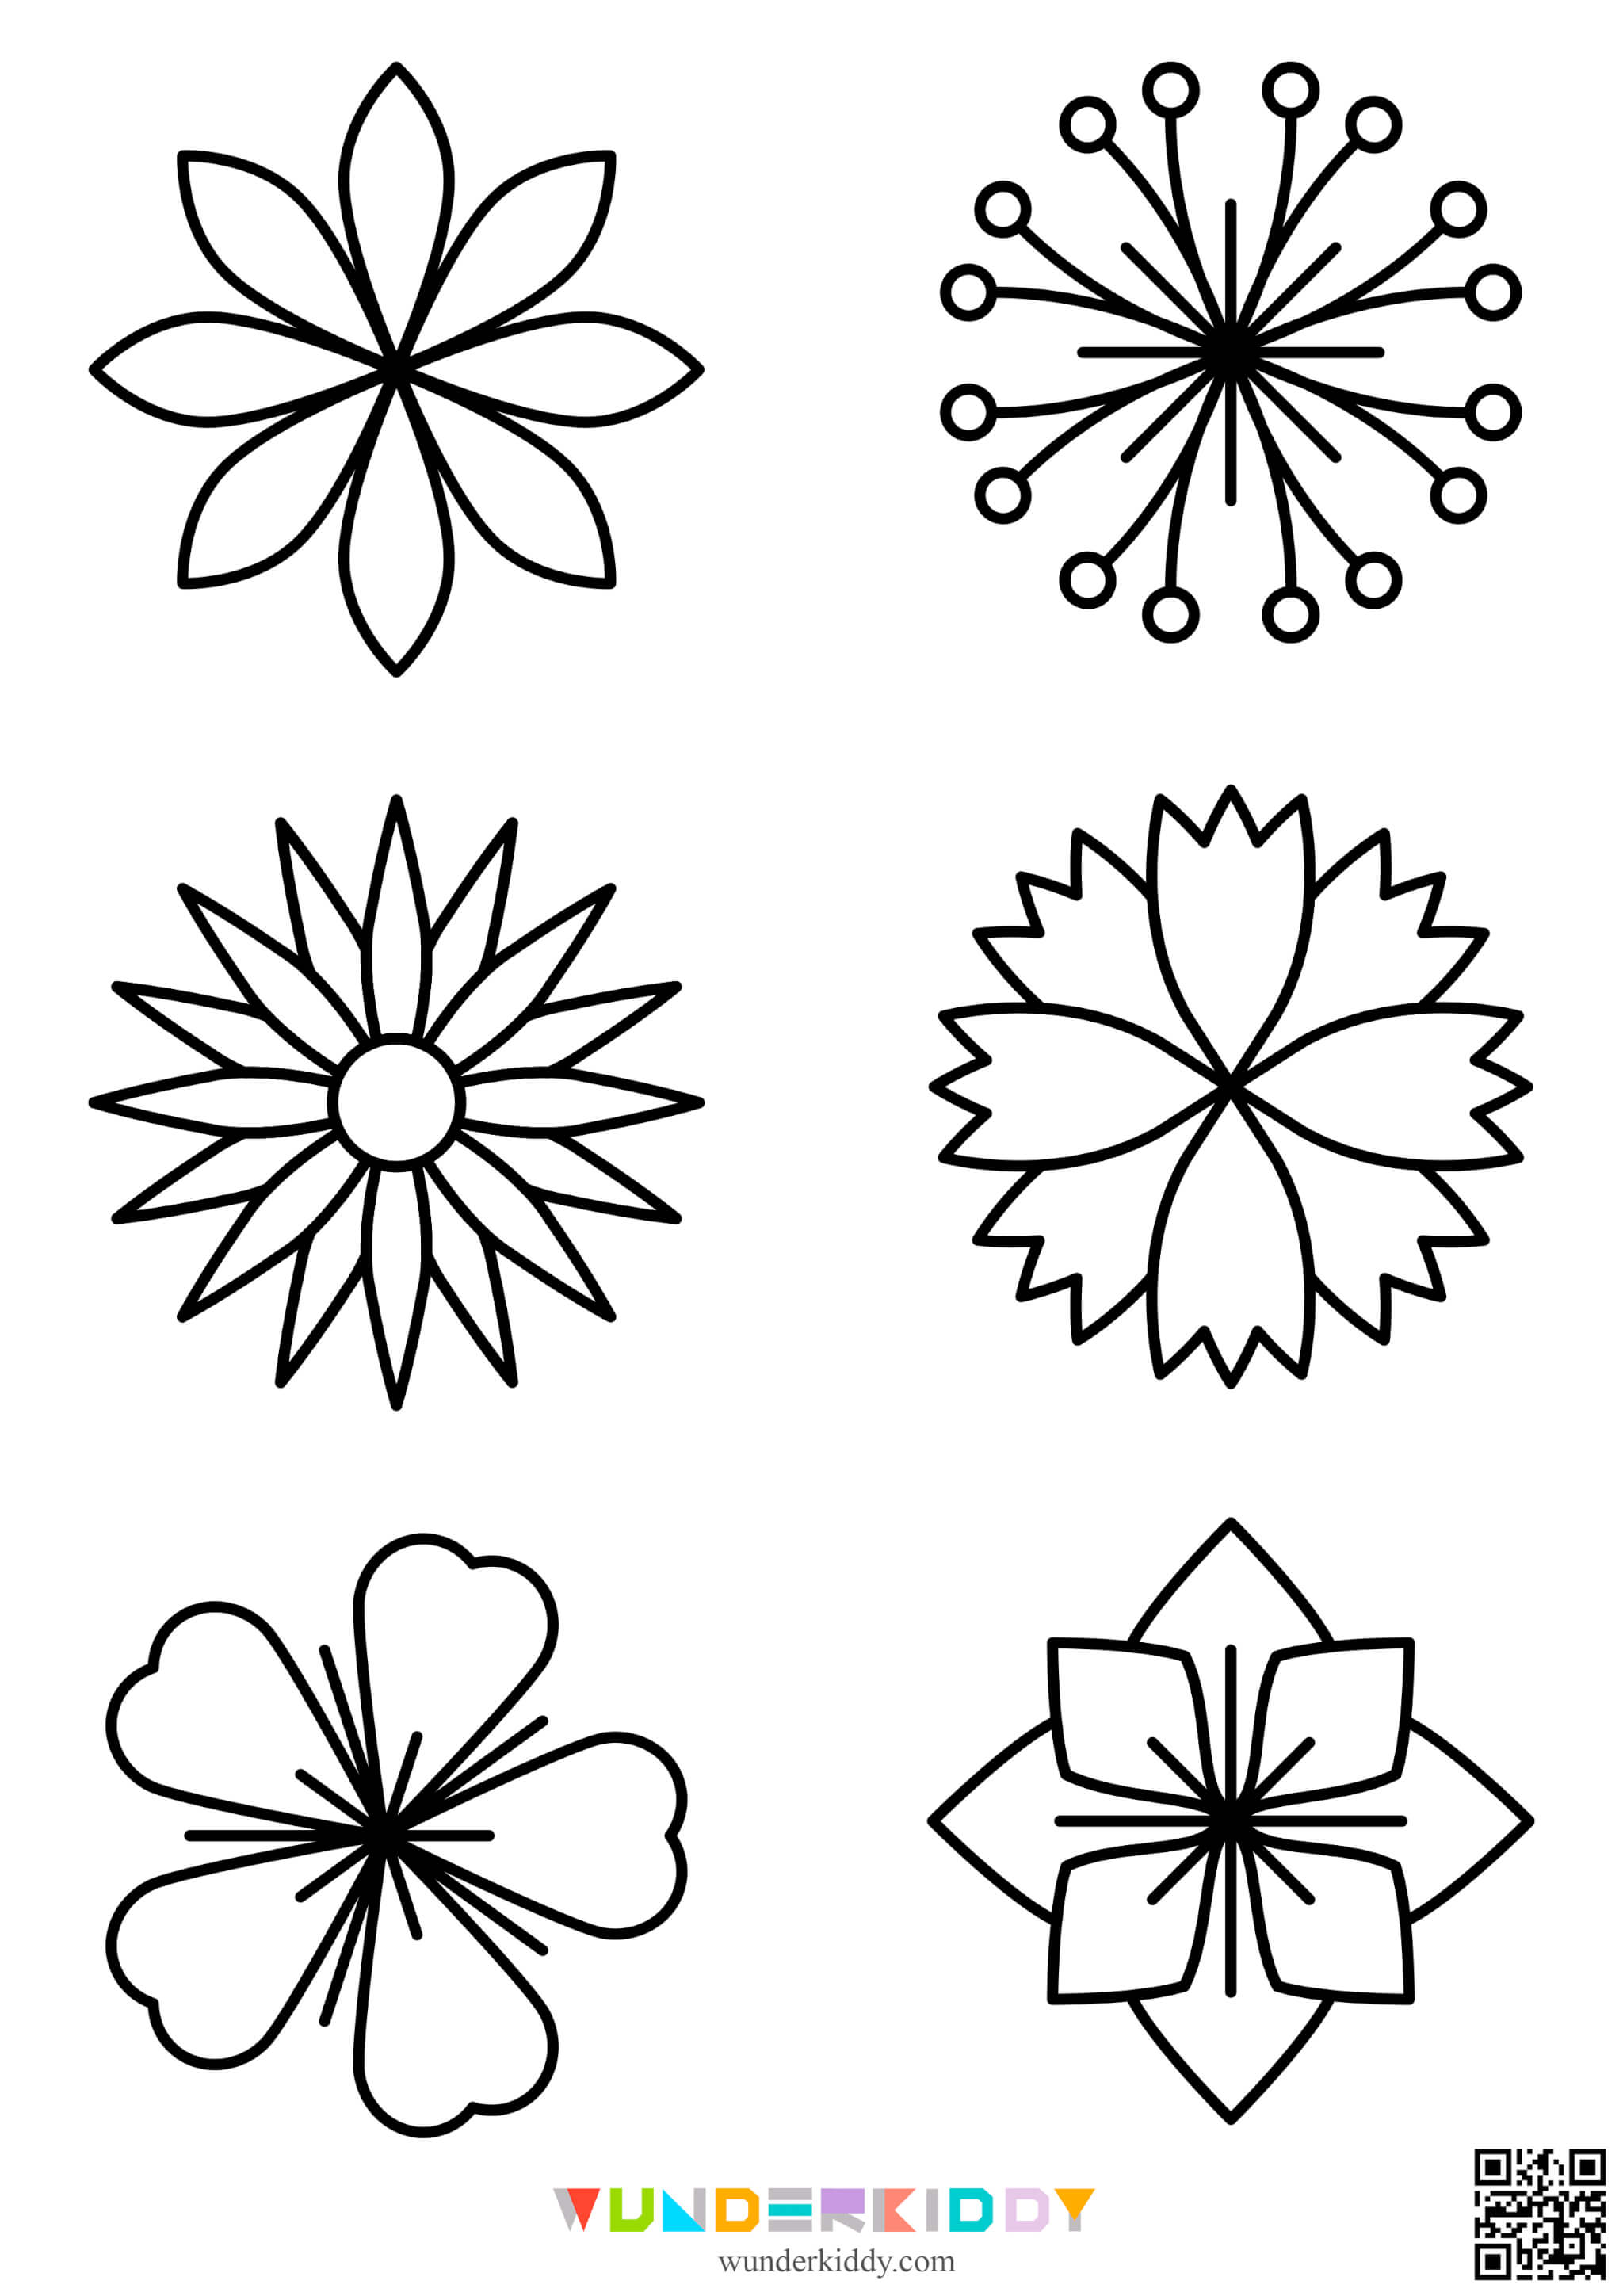 Simple Flower Templates - Image 2